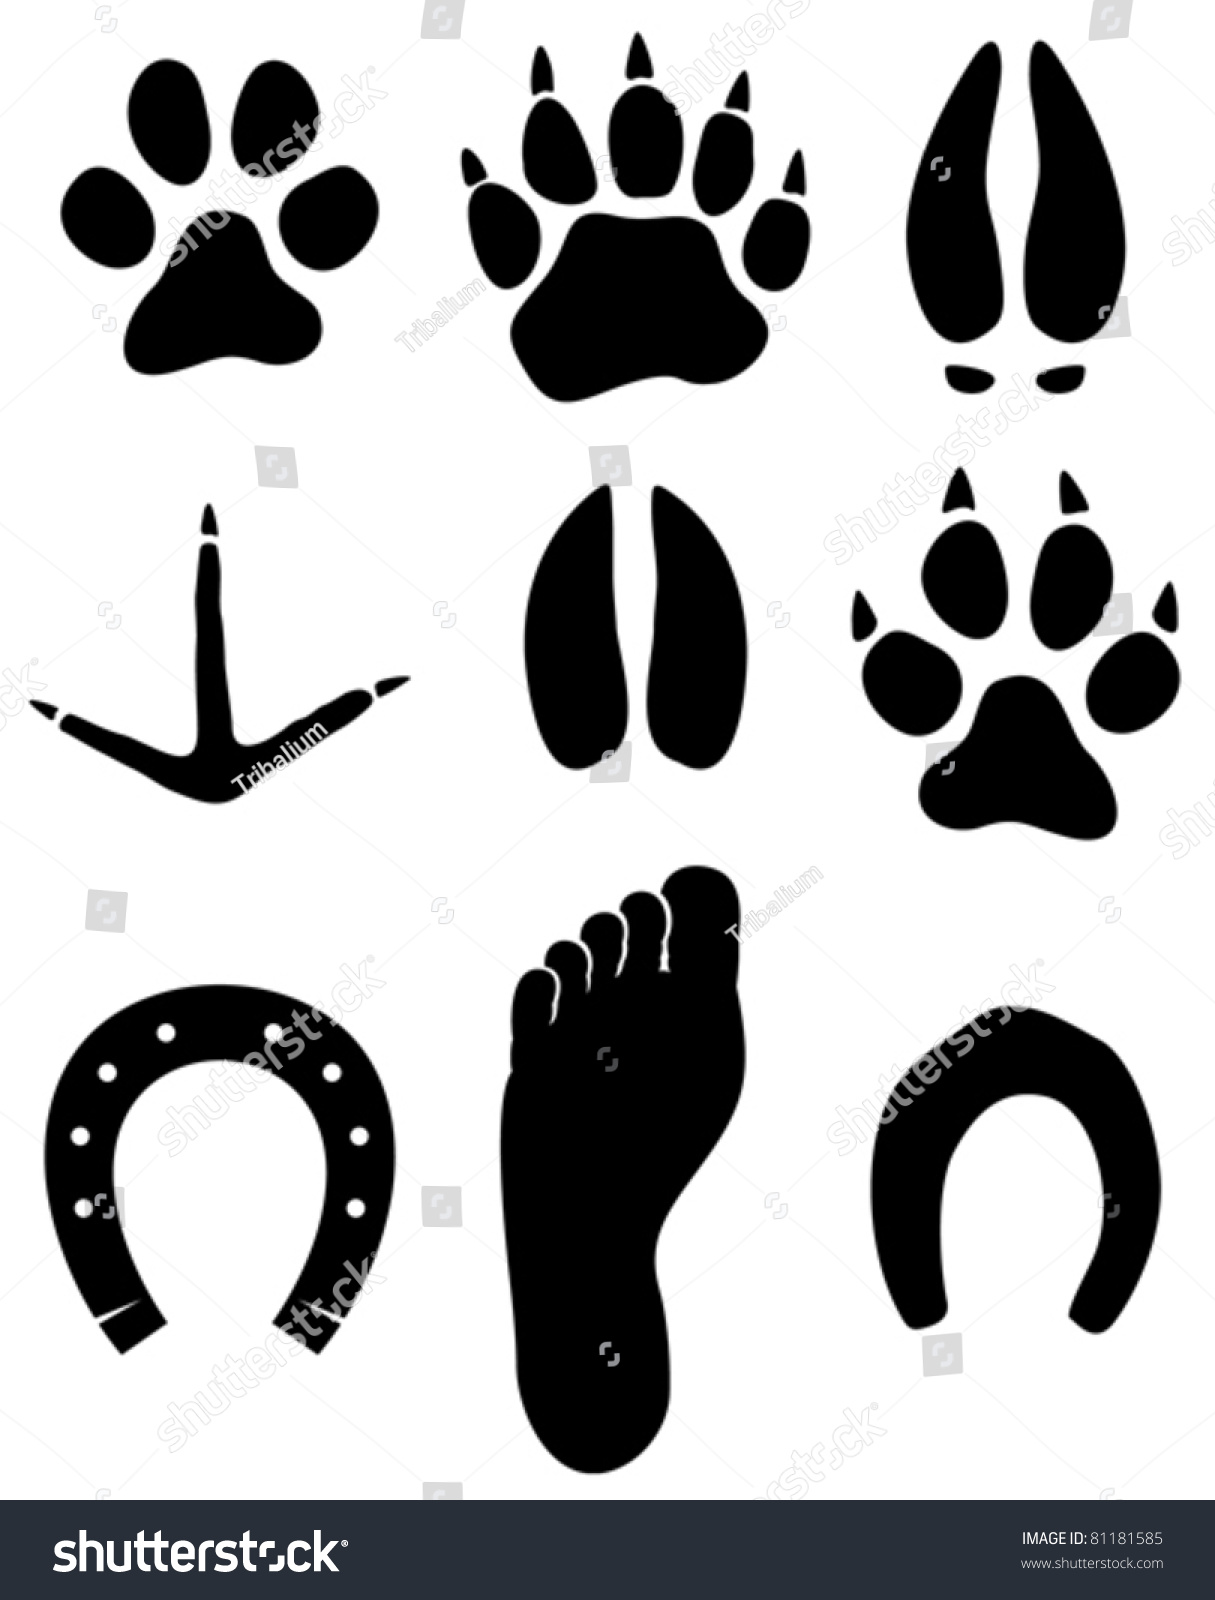 SVG of paw prints svg